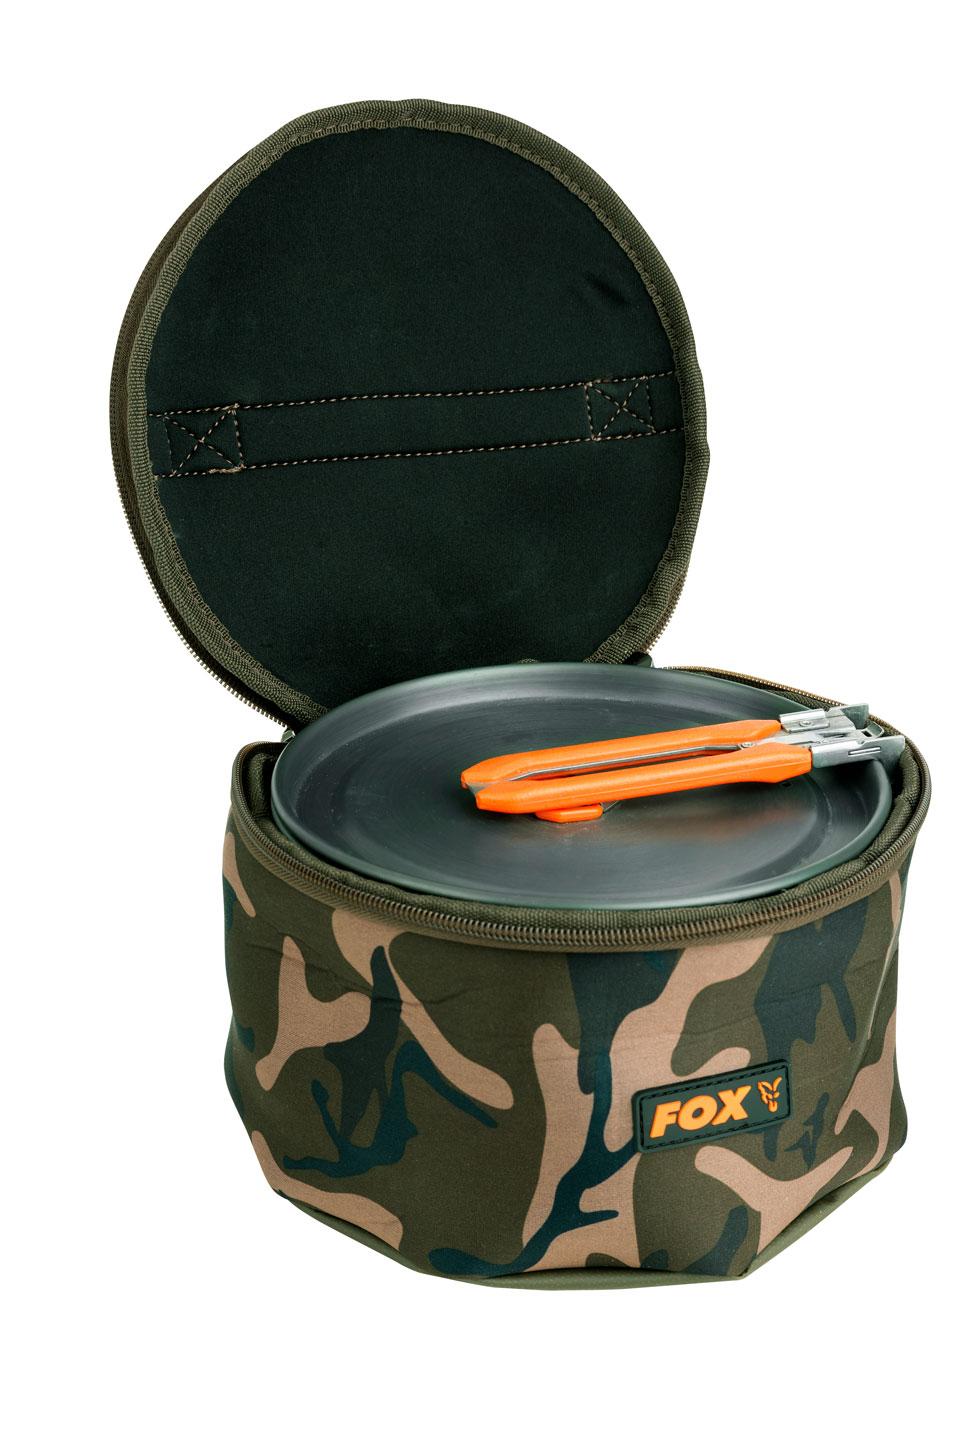 Camo Neoprene Cookset Bag Fox CamoLite Carp Fishing Luggage Range